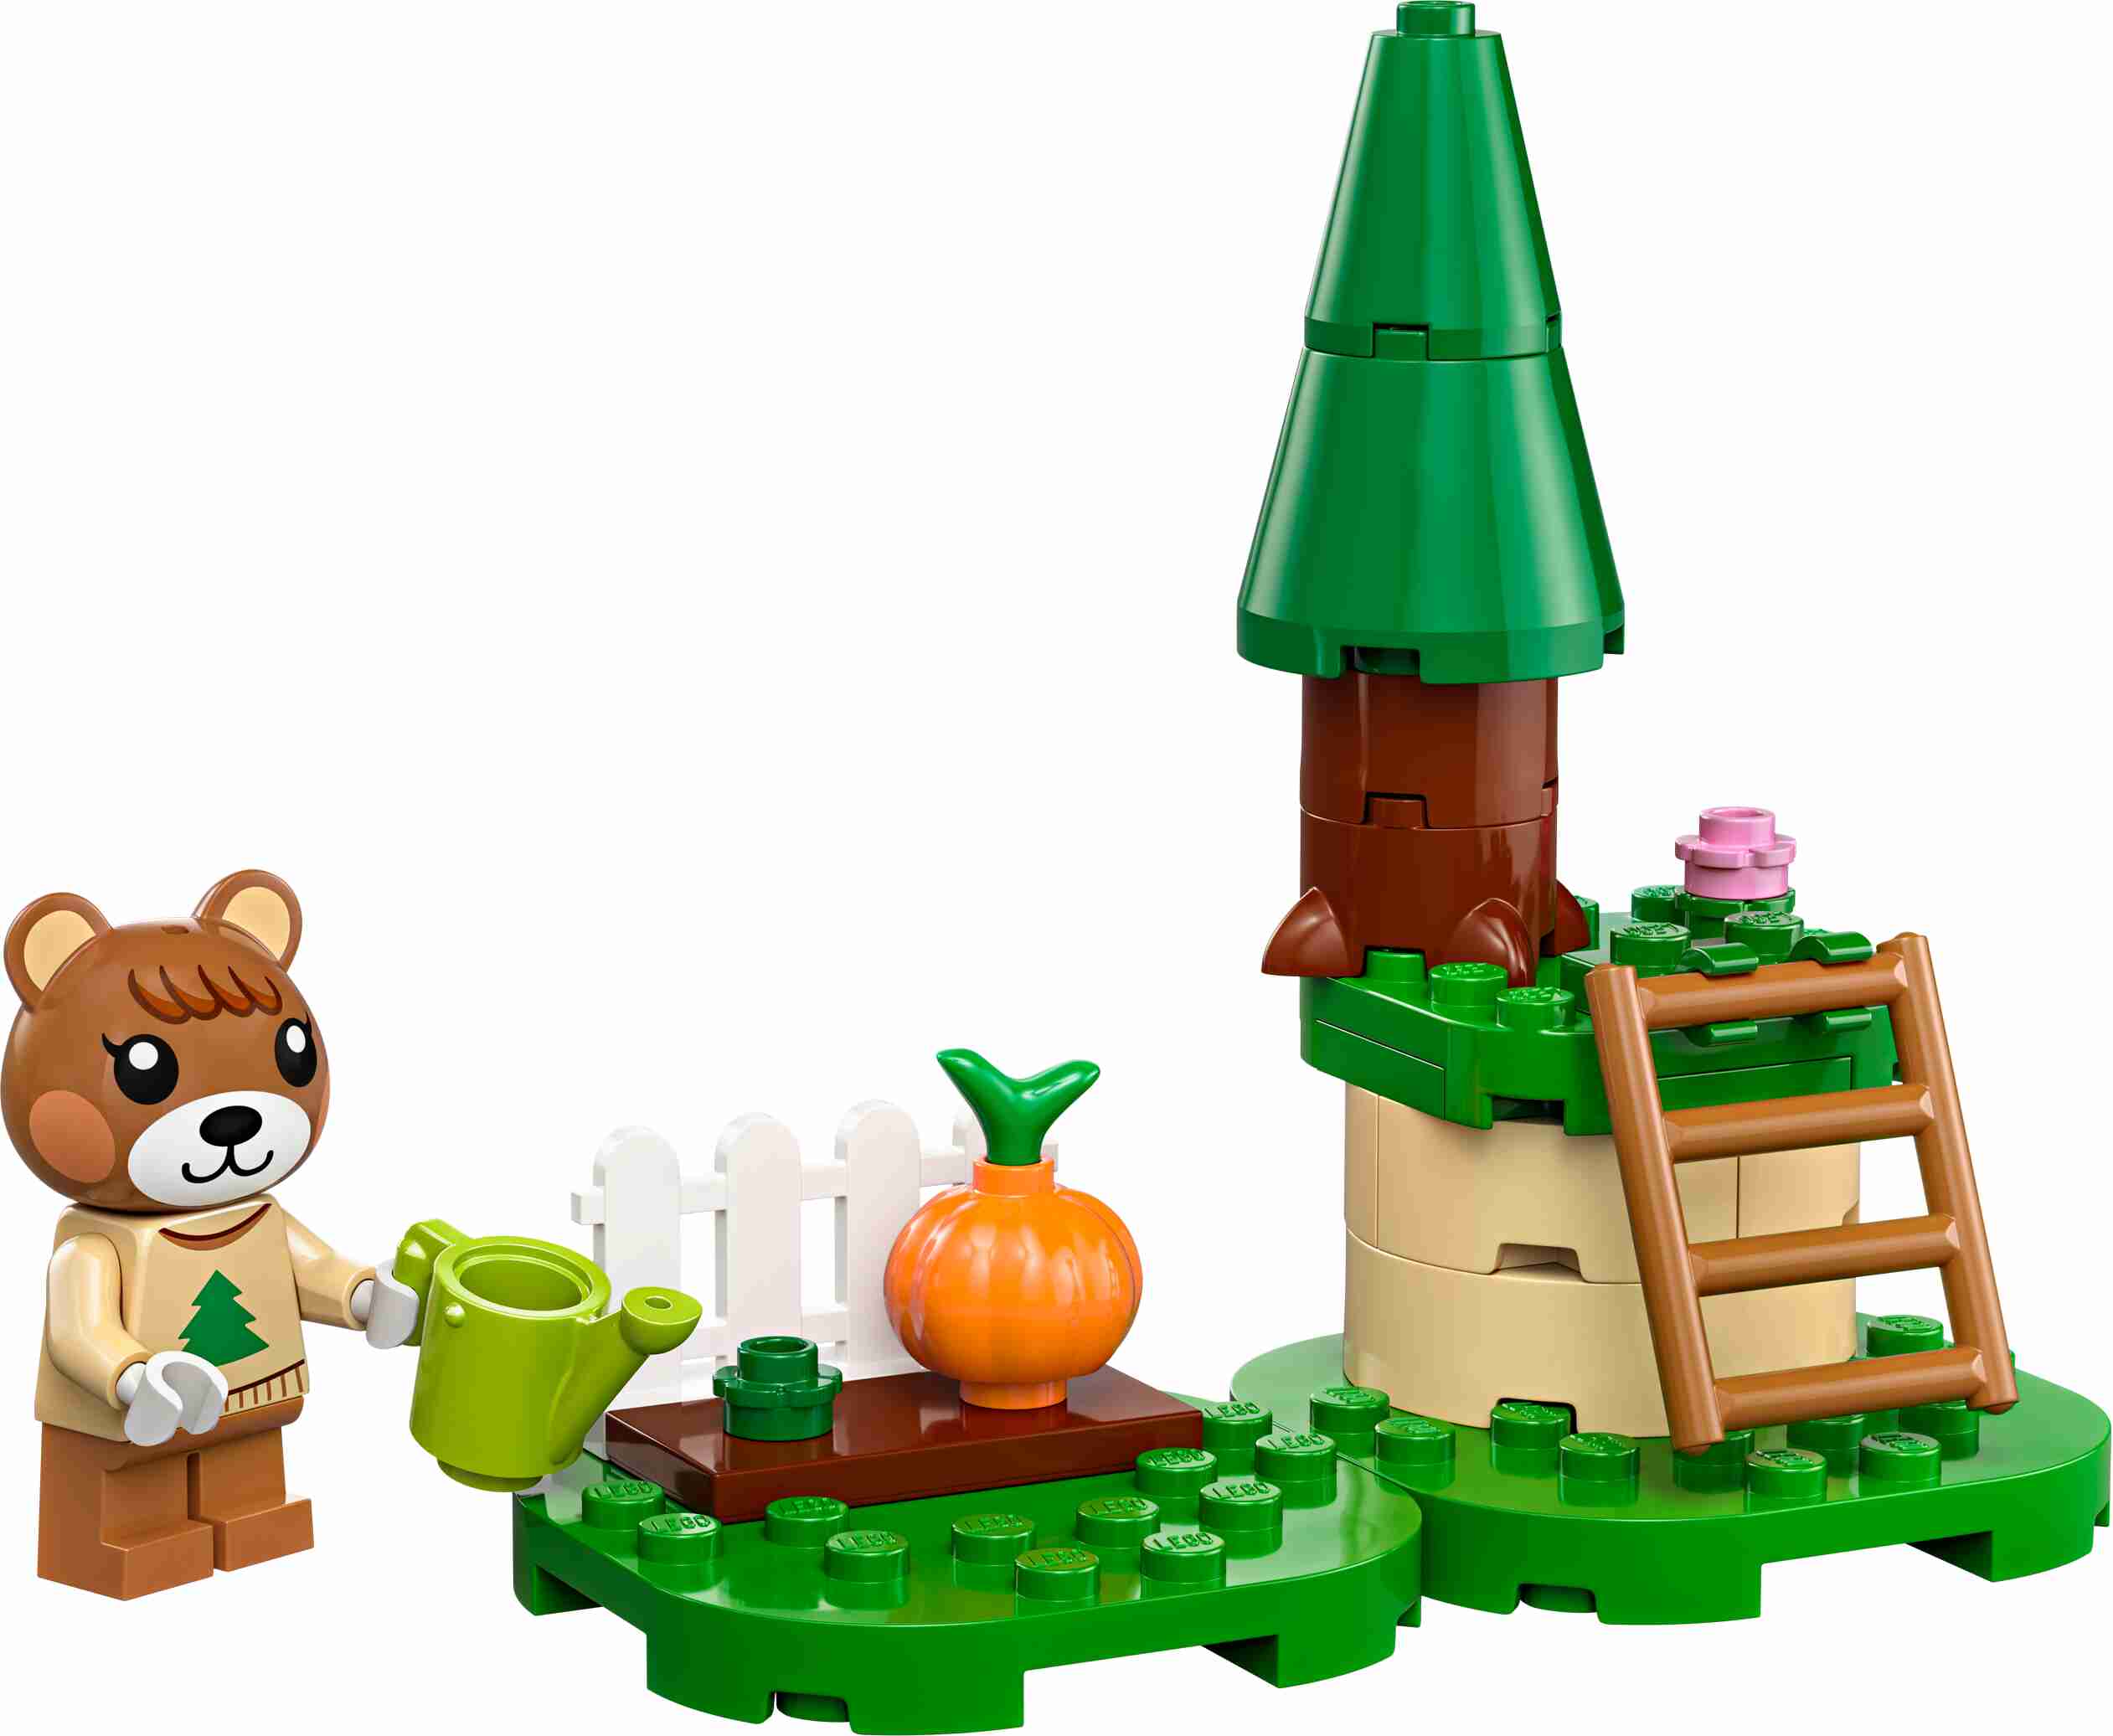 LEGO 30662 Animal Crossing Monas Kürbisgärtchen